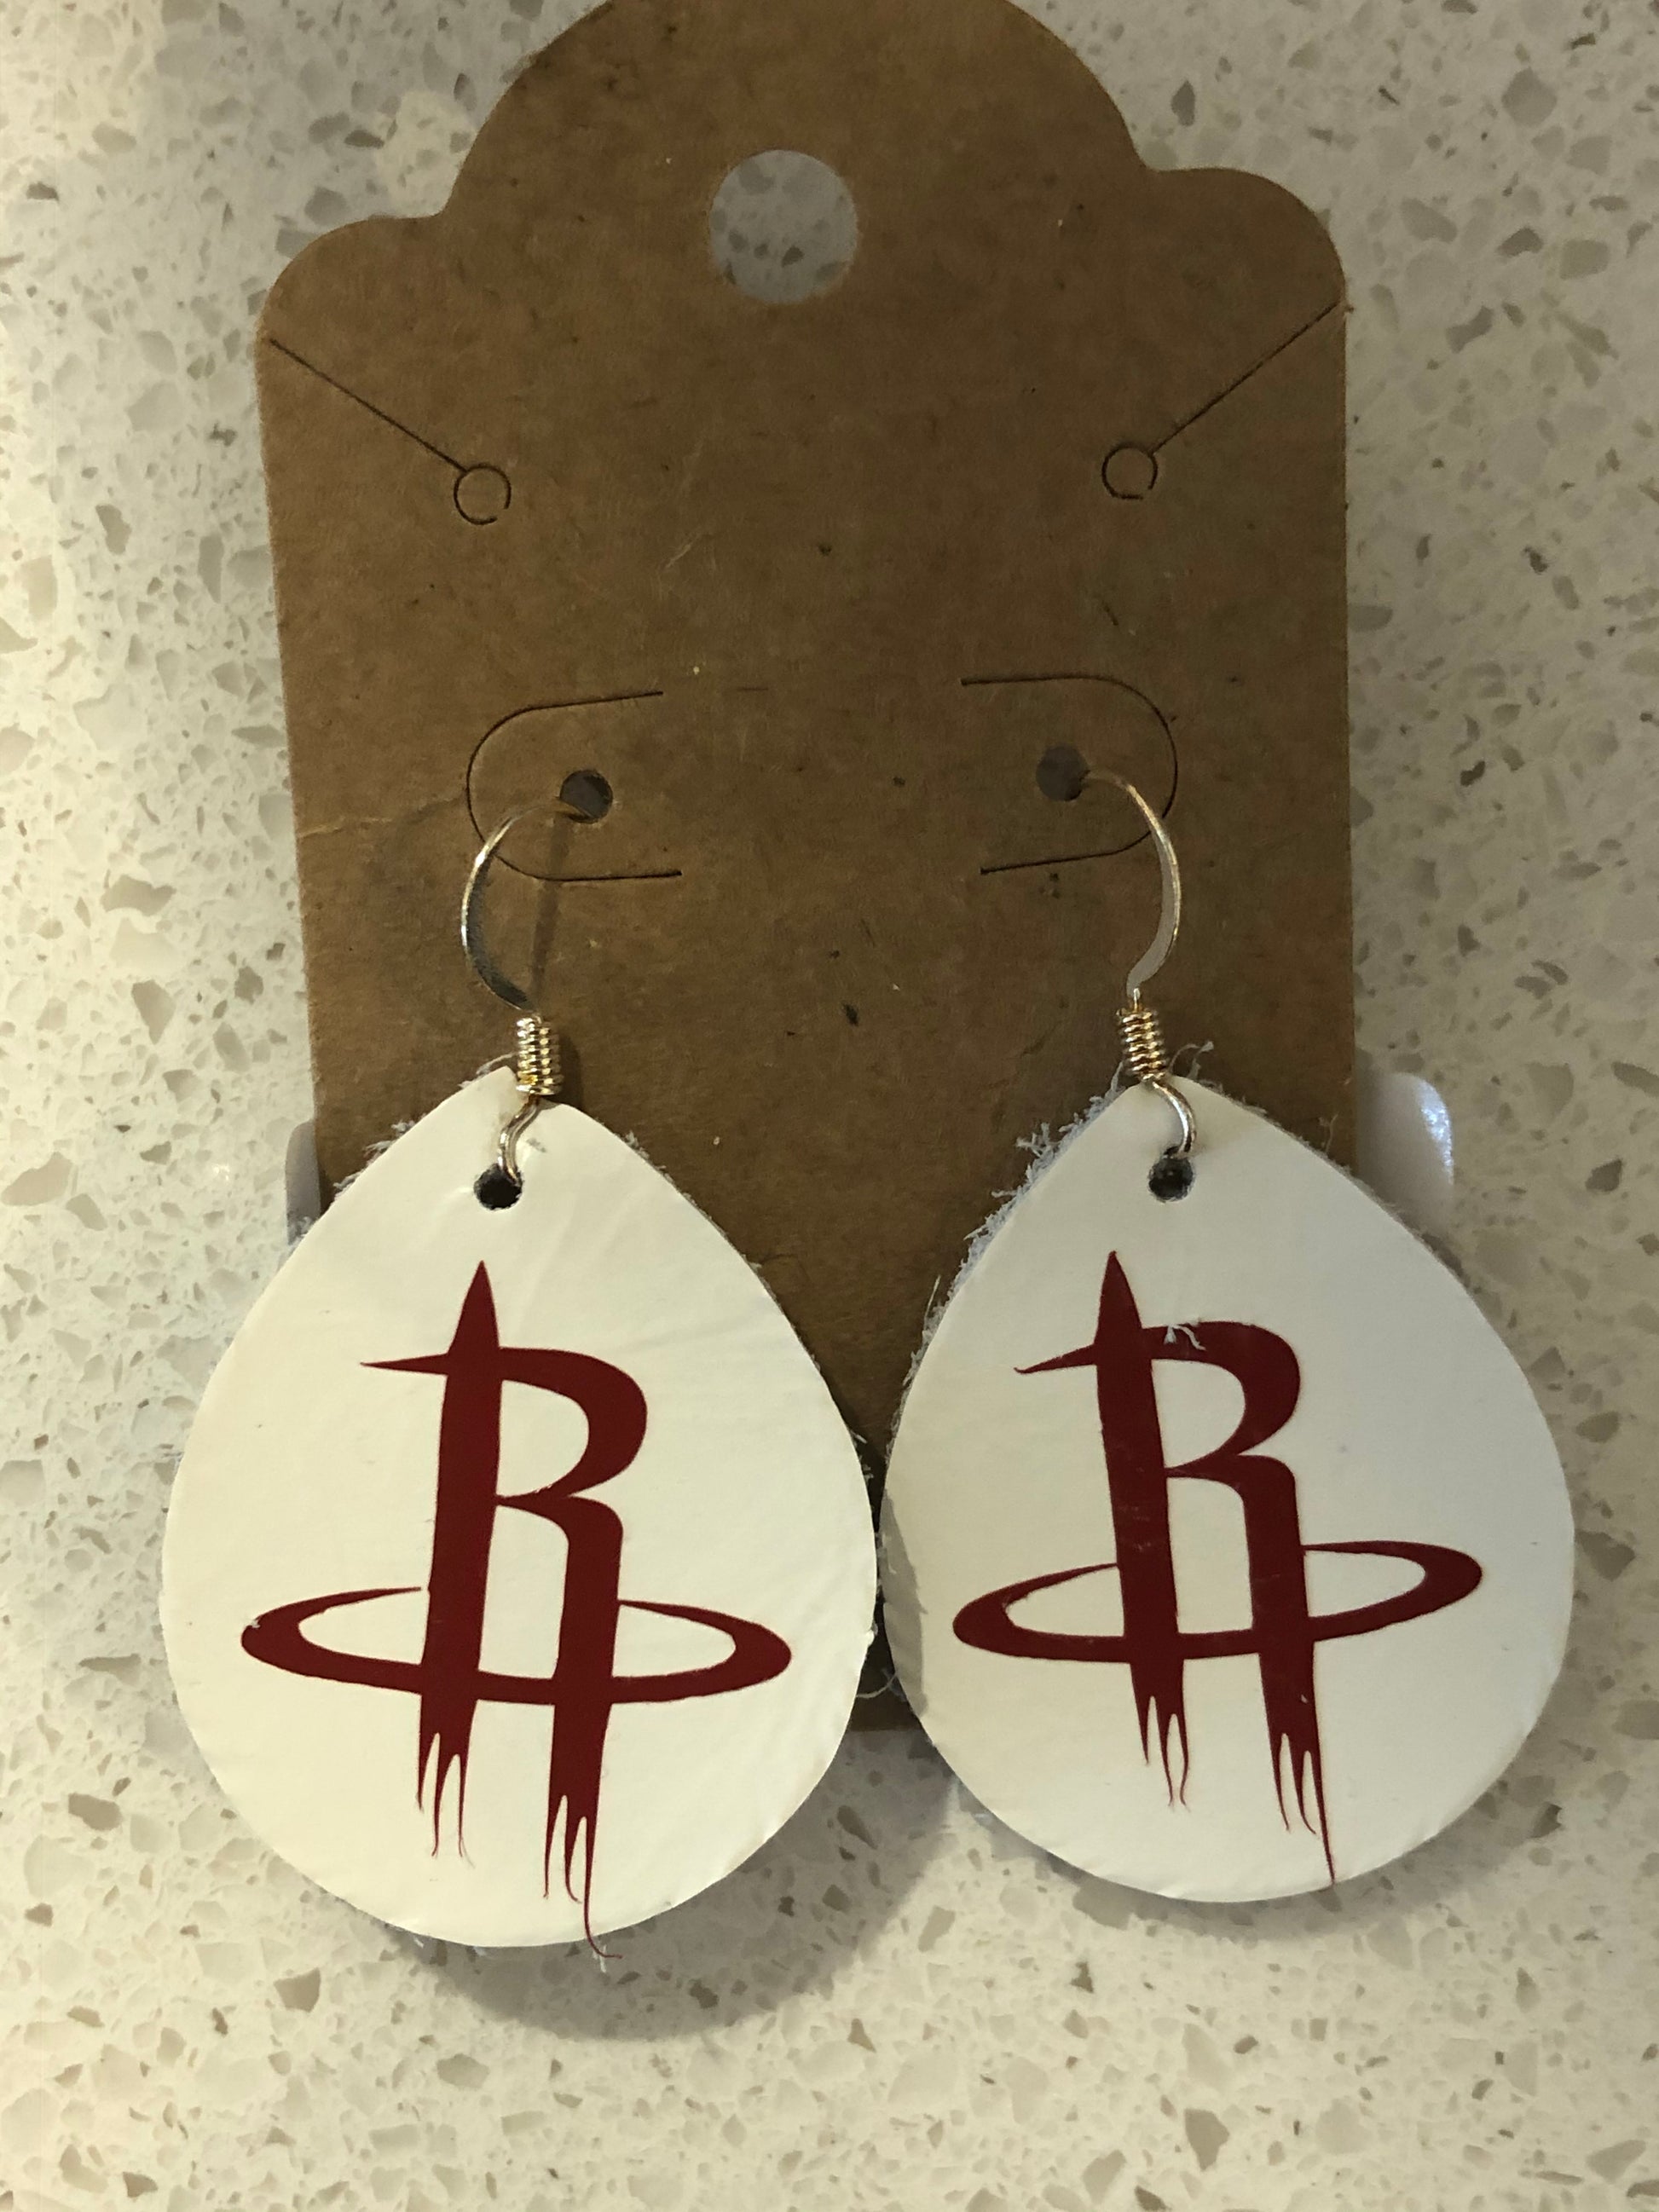 Tear drop shaped white leather earrings with Houston Rockets logo